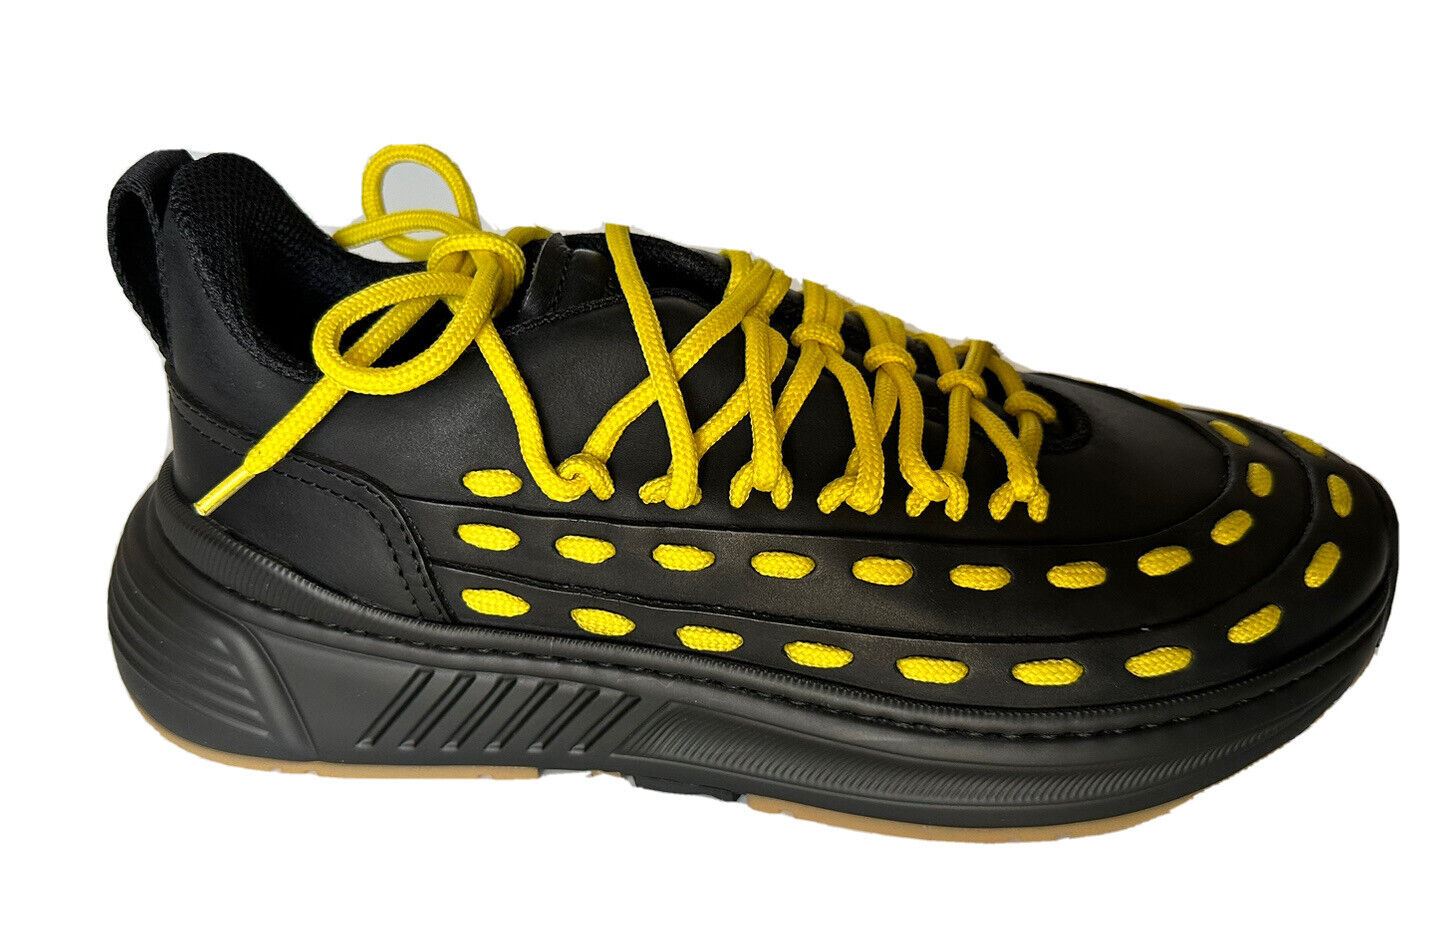 NIB $950 Bottega Veneta Mens Leather Black/Yellow Sneakers 12 US 578305 1013